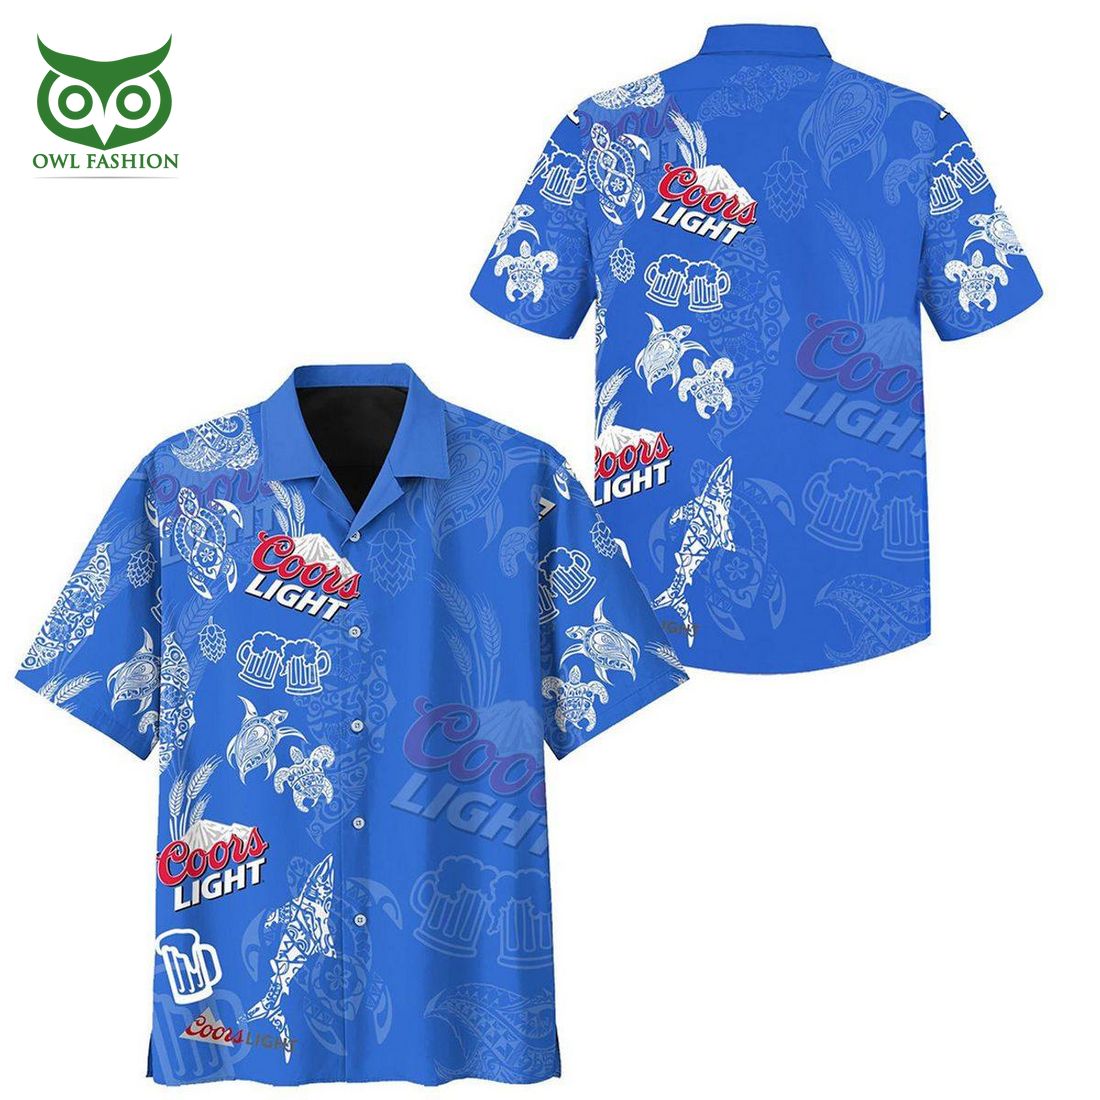 Michael Myers Baseball Jersey Style 8 Shirt Gift For Men And Women -  Freedomdesign